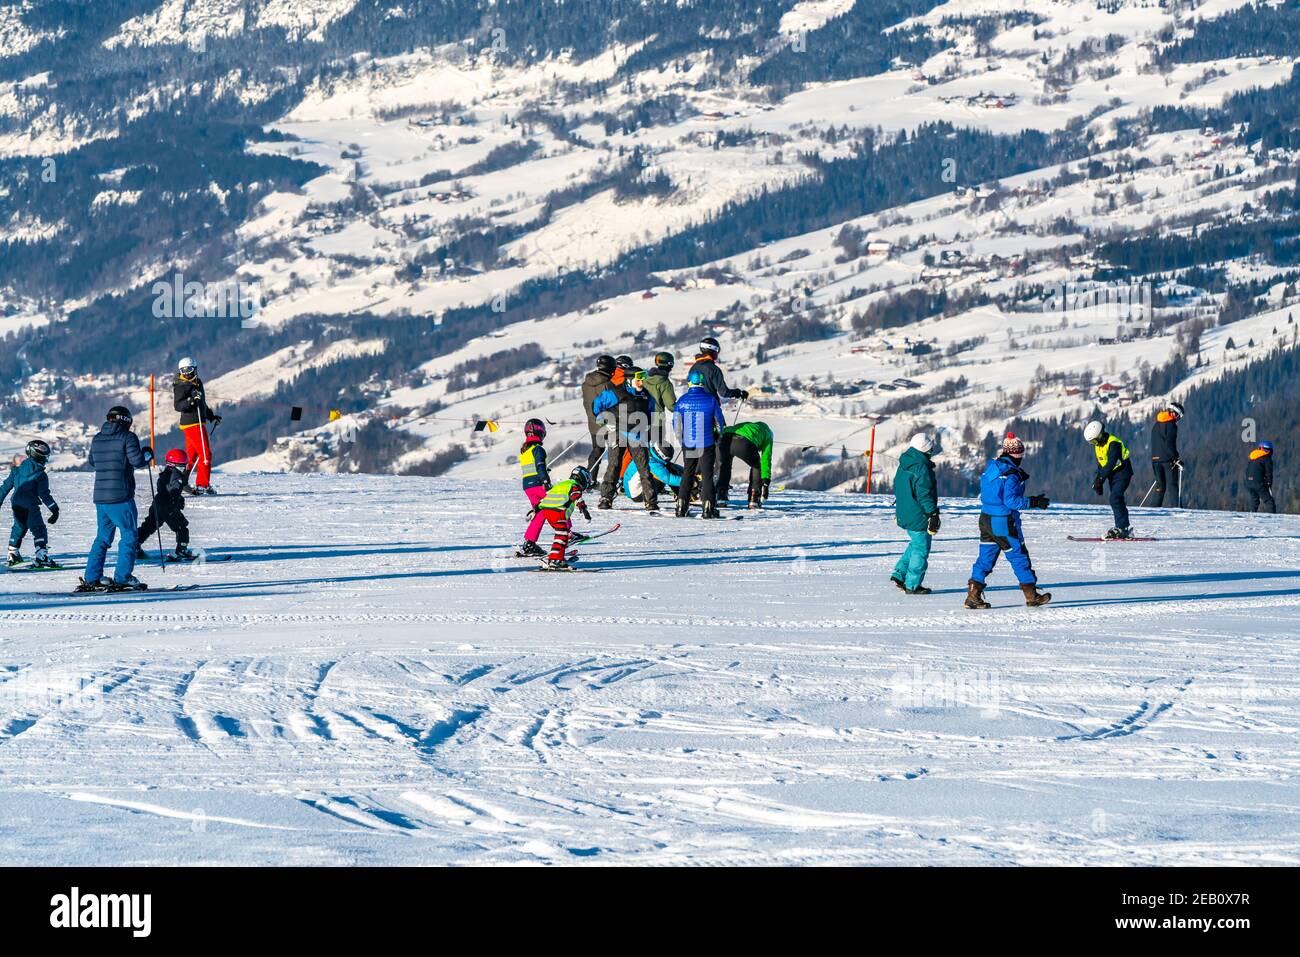 Un grande gruppo di sciatori insieme in una vacanza invernale in una località sciistica alpina. Foto Stock